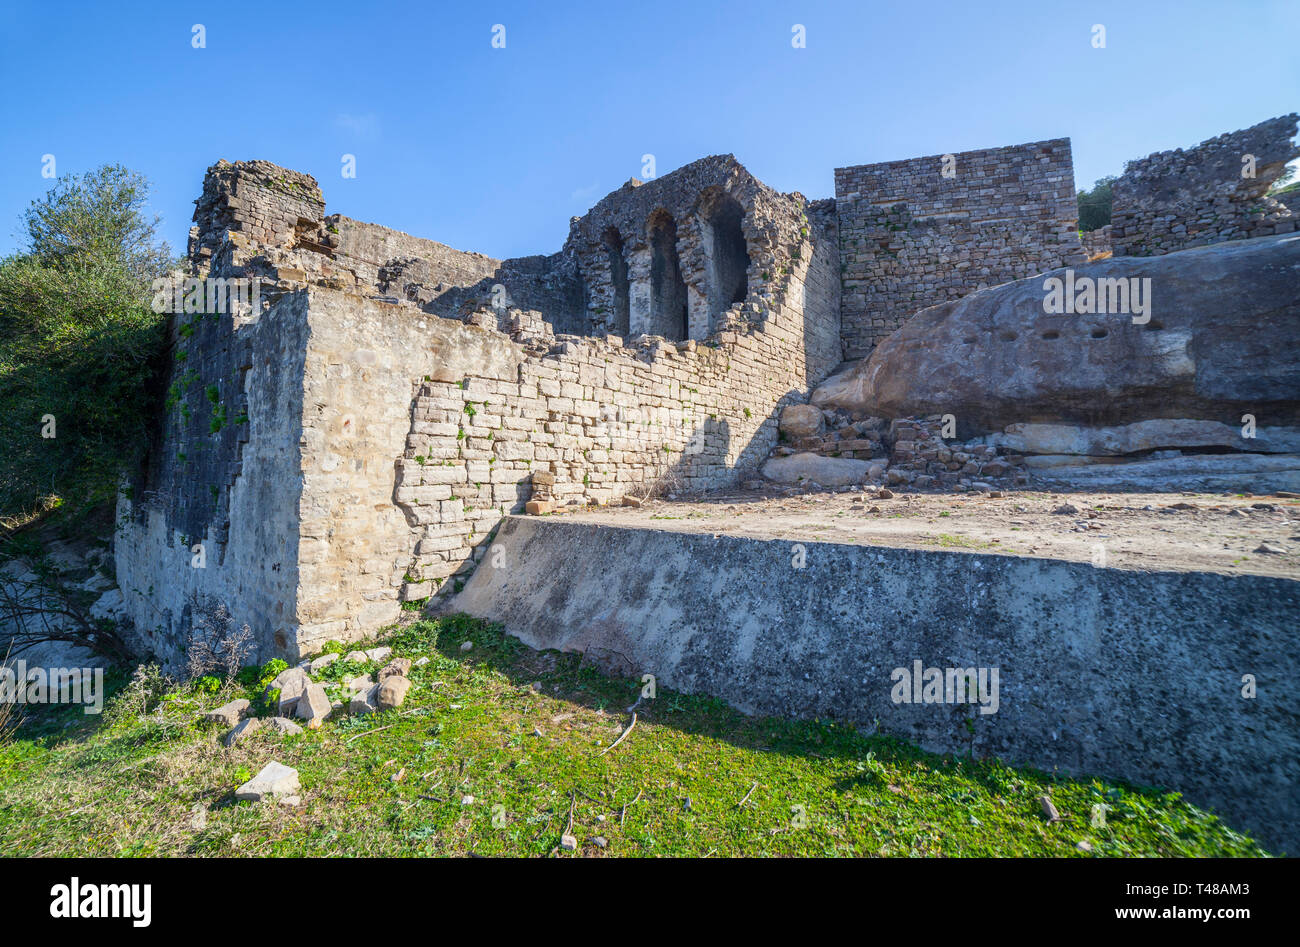 Roman remains at Castle of Jimena de la Frontera, Cadiz, Spain. Hydraulic infrastructure Stock Photo